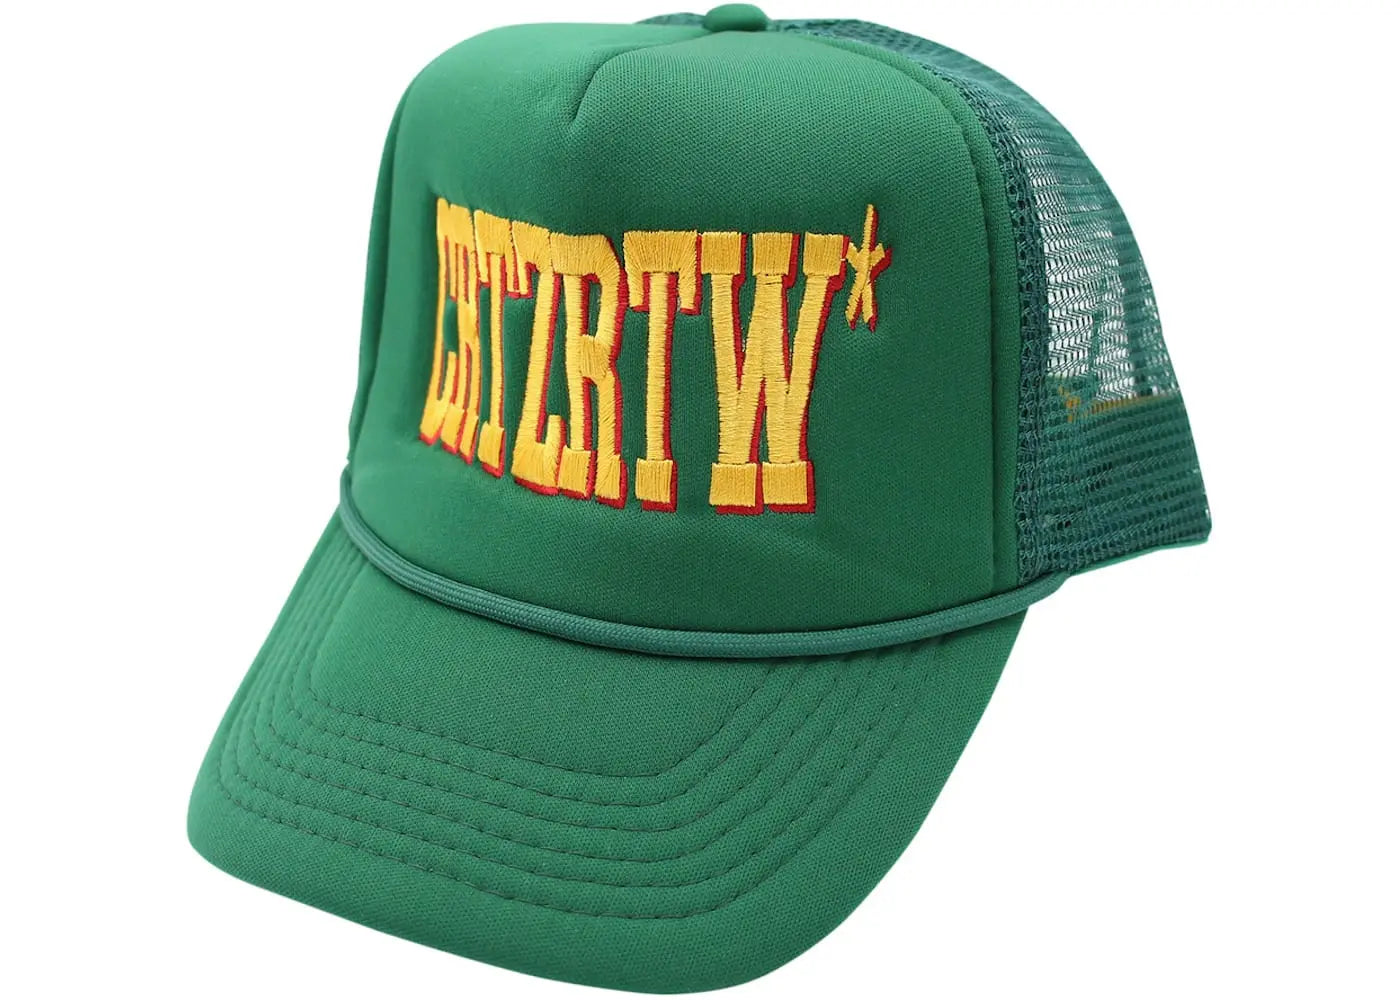 Corteiz Cultfiction Trucker Hat Green in Auckland, New Zealand - Shop name